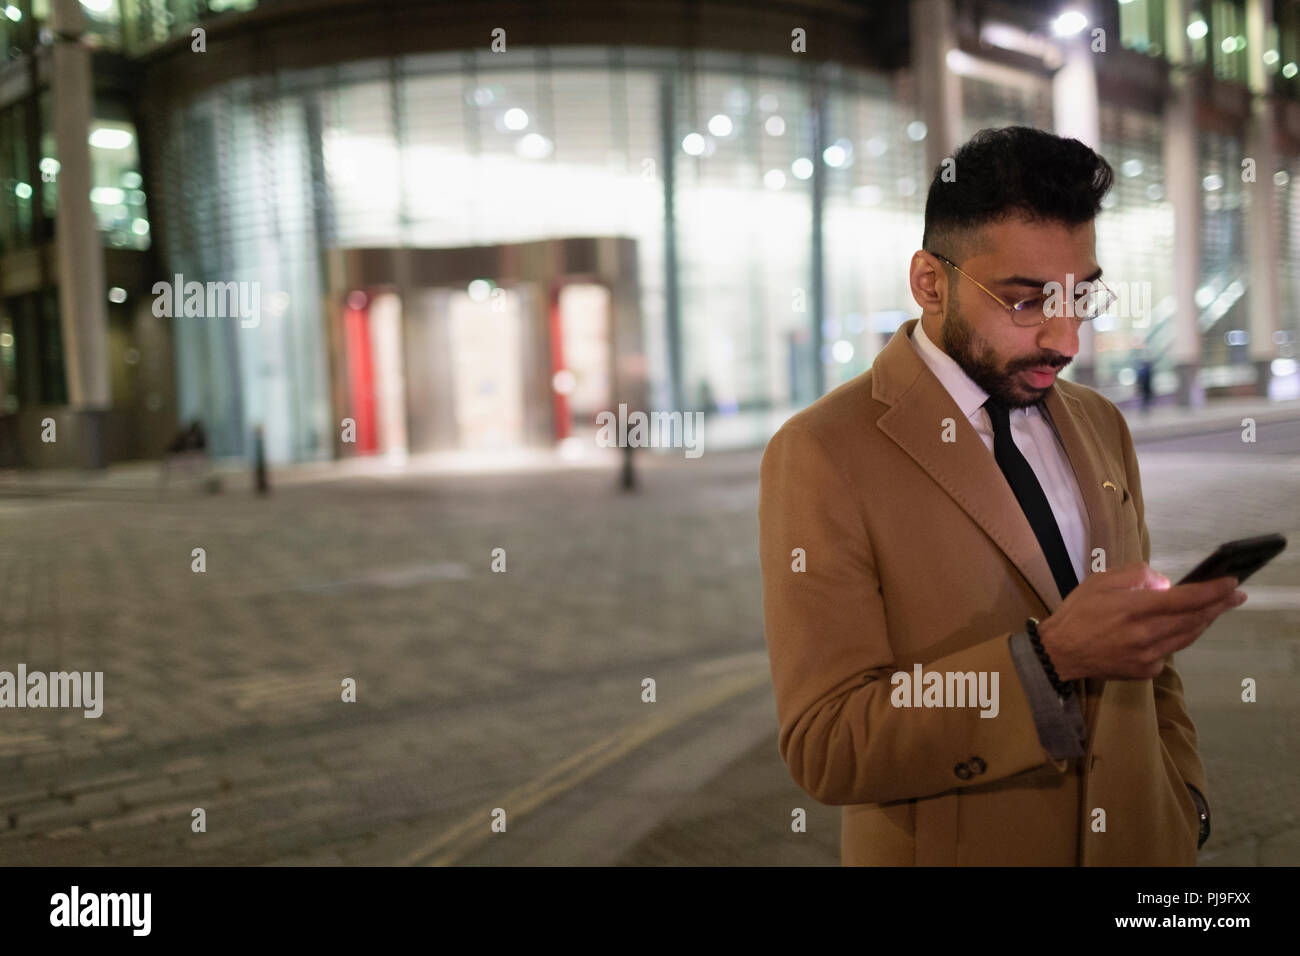 Businessman texting with smart phone on urban street corner at night Stock Photo